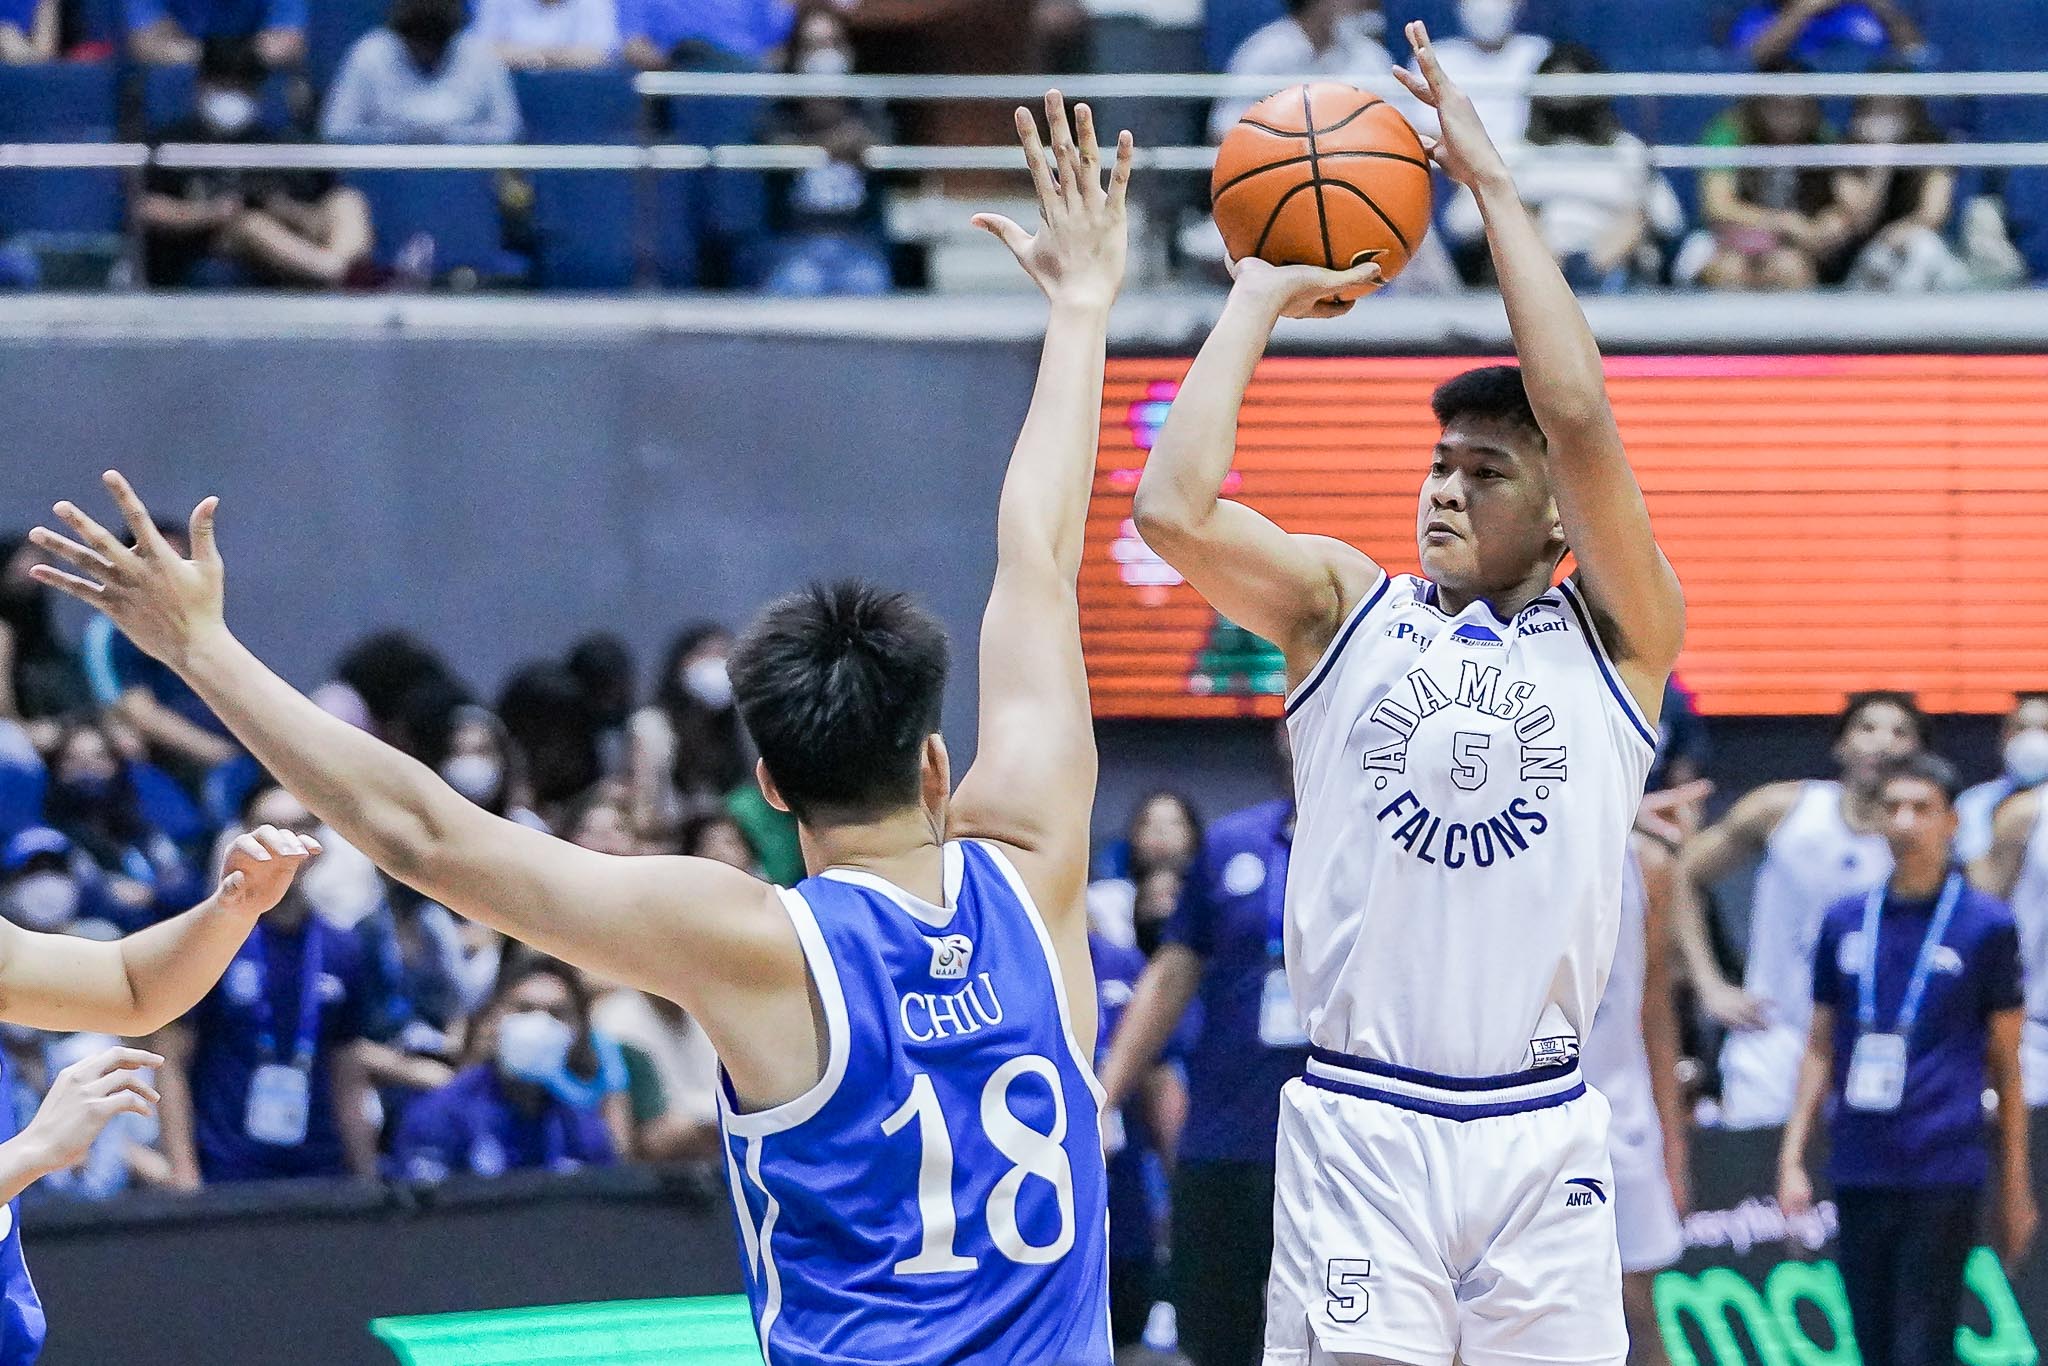 UAAP-MBB-AP-Manlapaz-ADU-2 After Ateneo blow, Adamson looks forward to settling Final Four hopes against La Salle AdU Basketball News UAAP  - philippine sports news